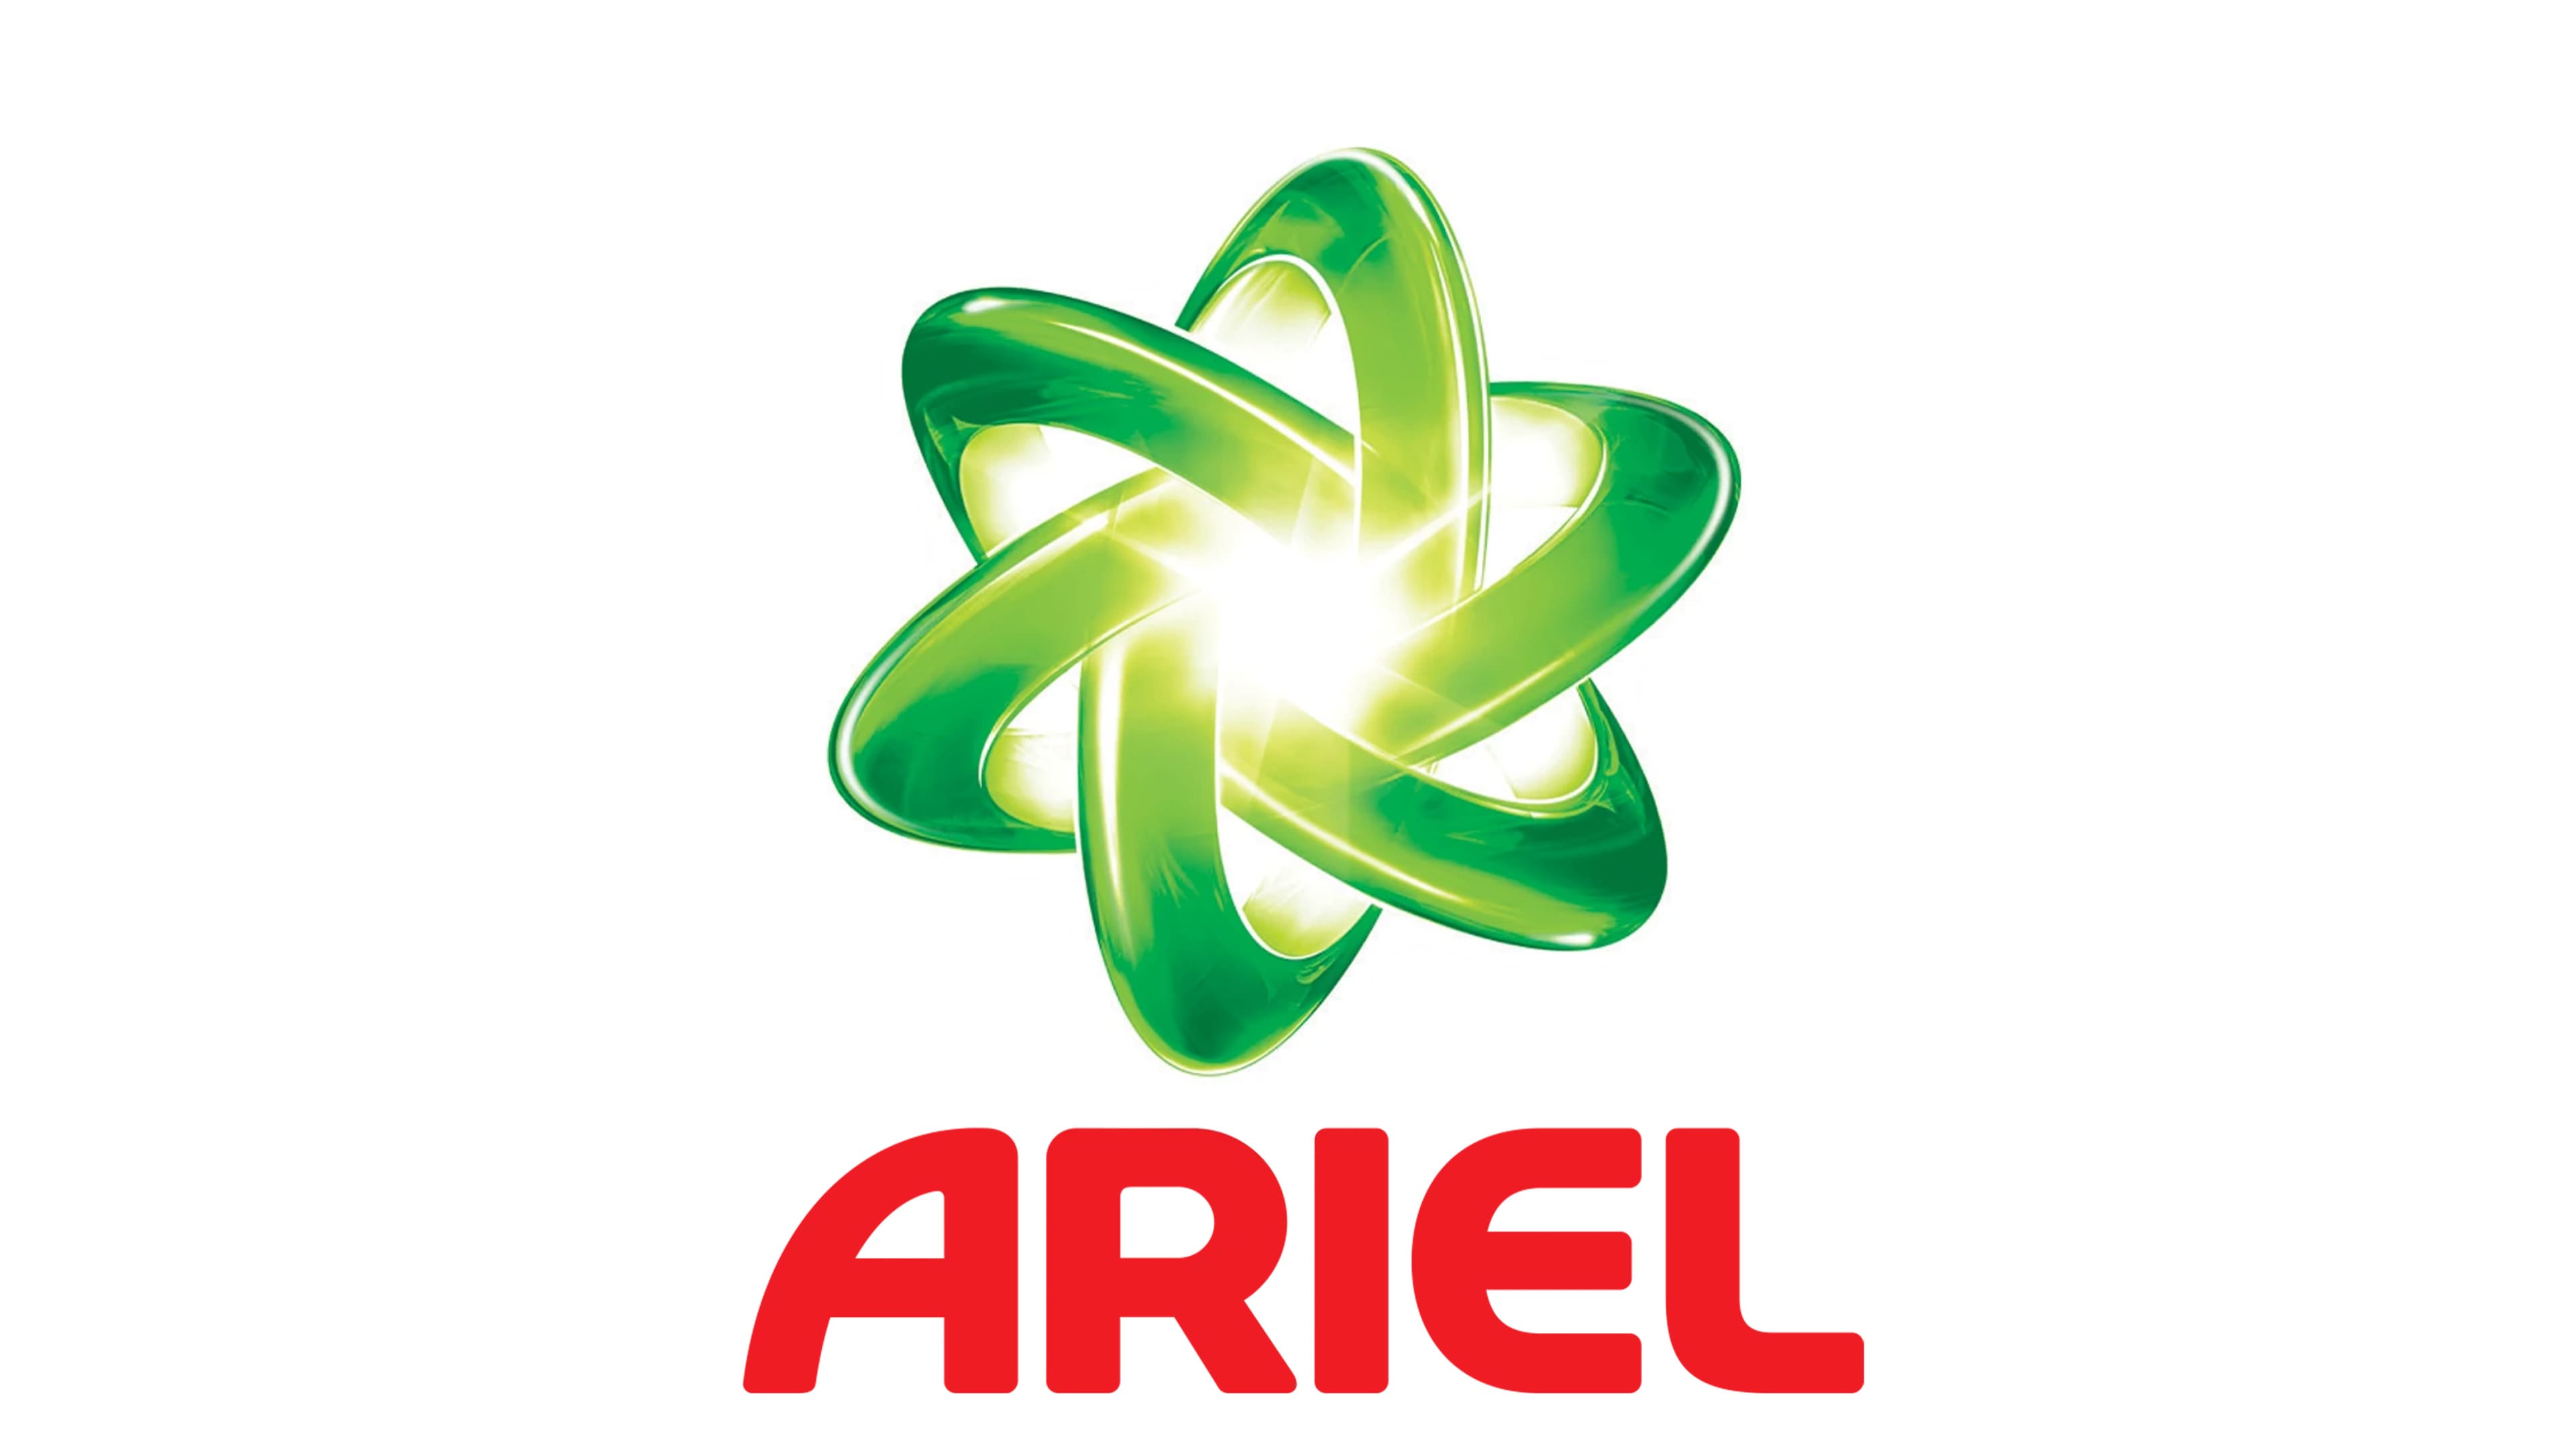 Ariel Detergent Powder Logo Temporary Tattoos at best price in Mumbai